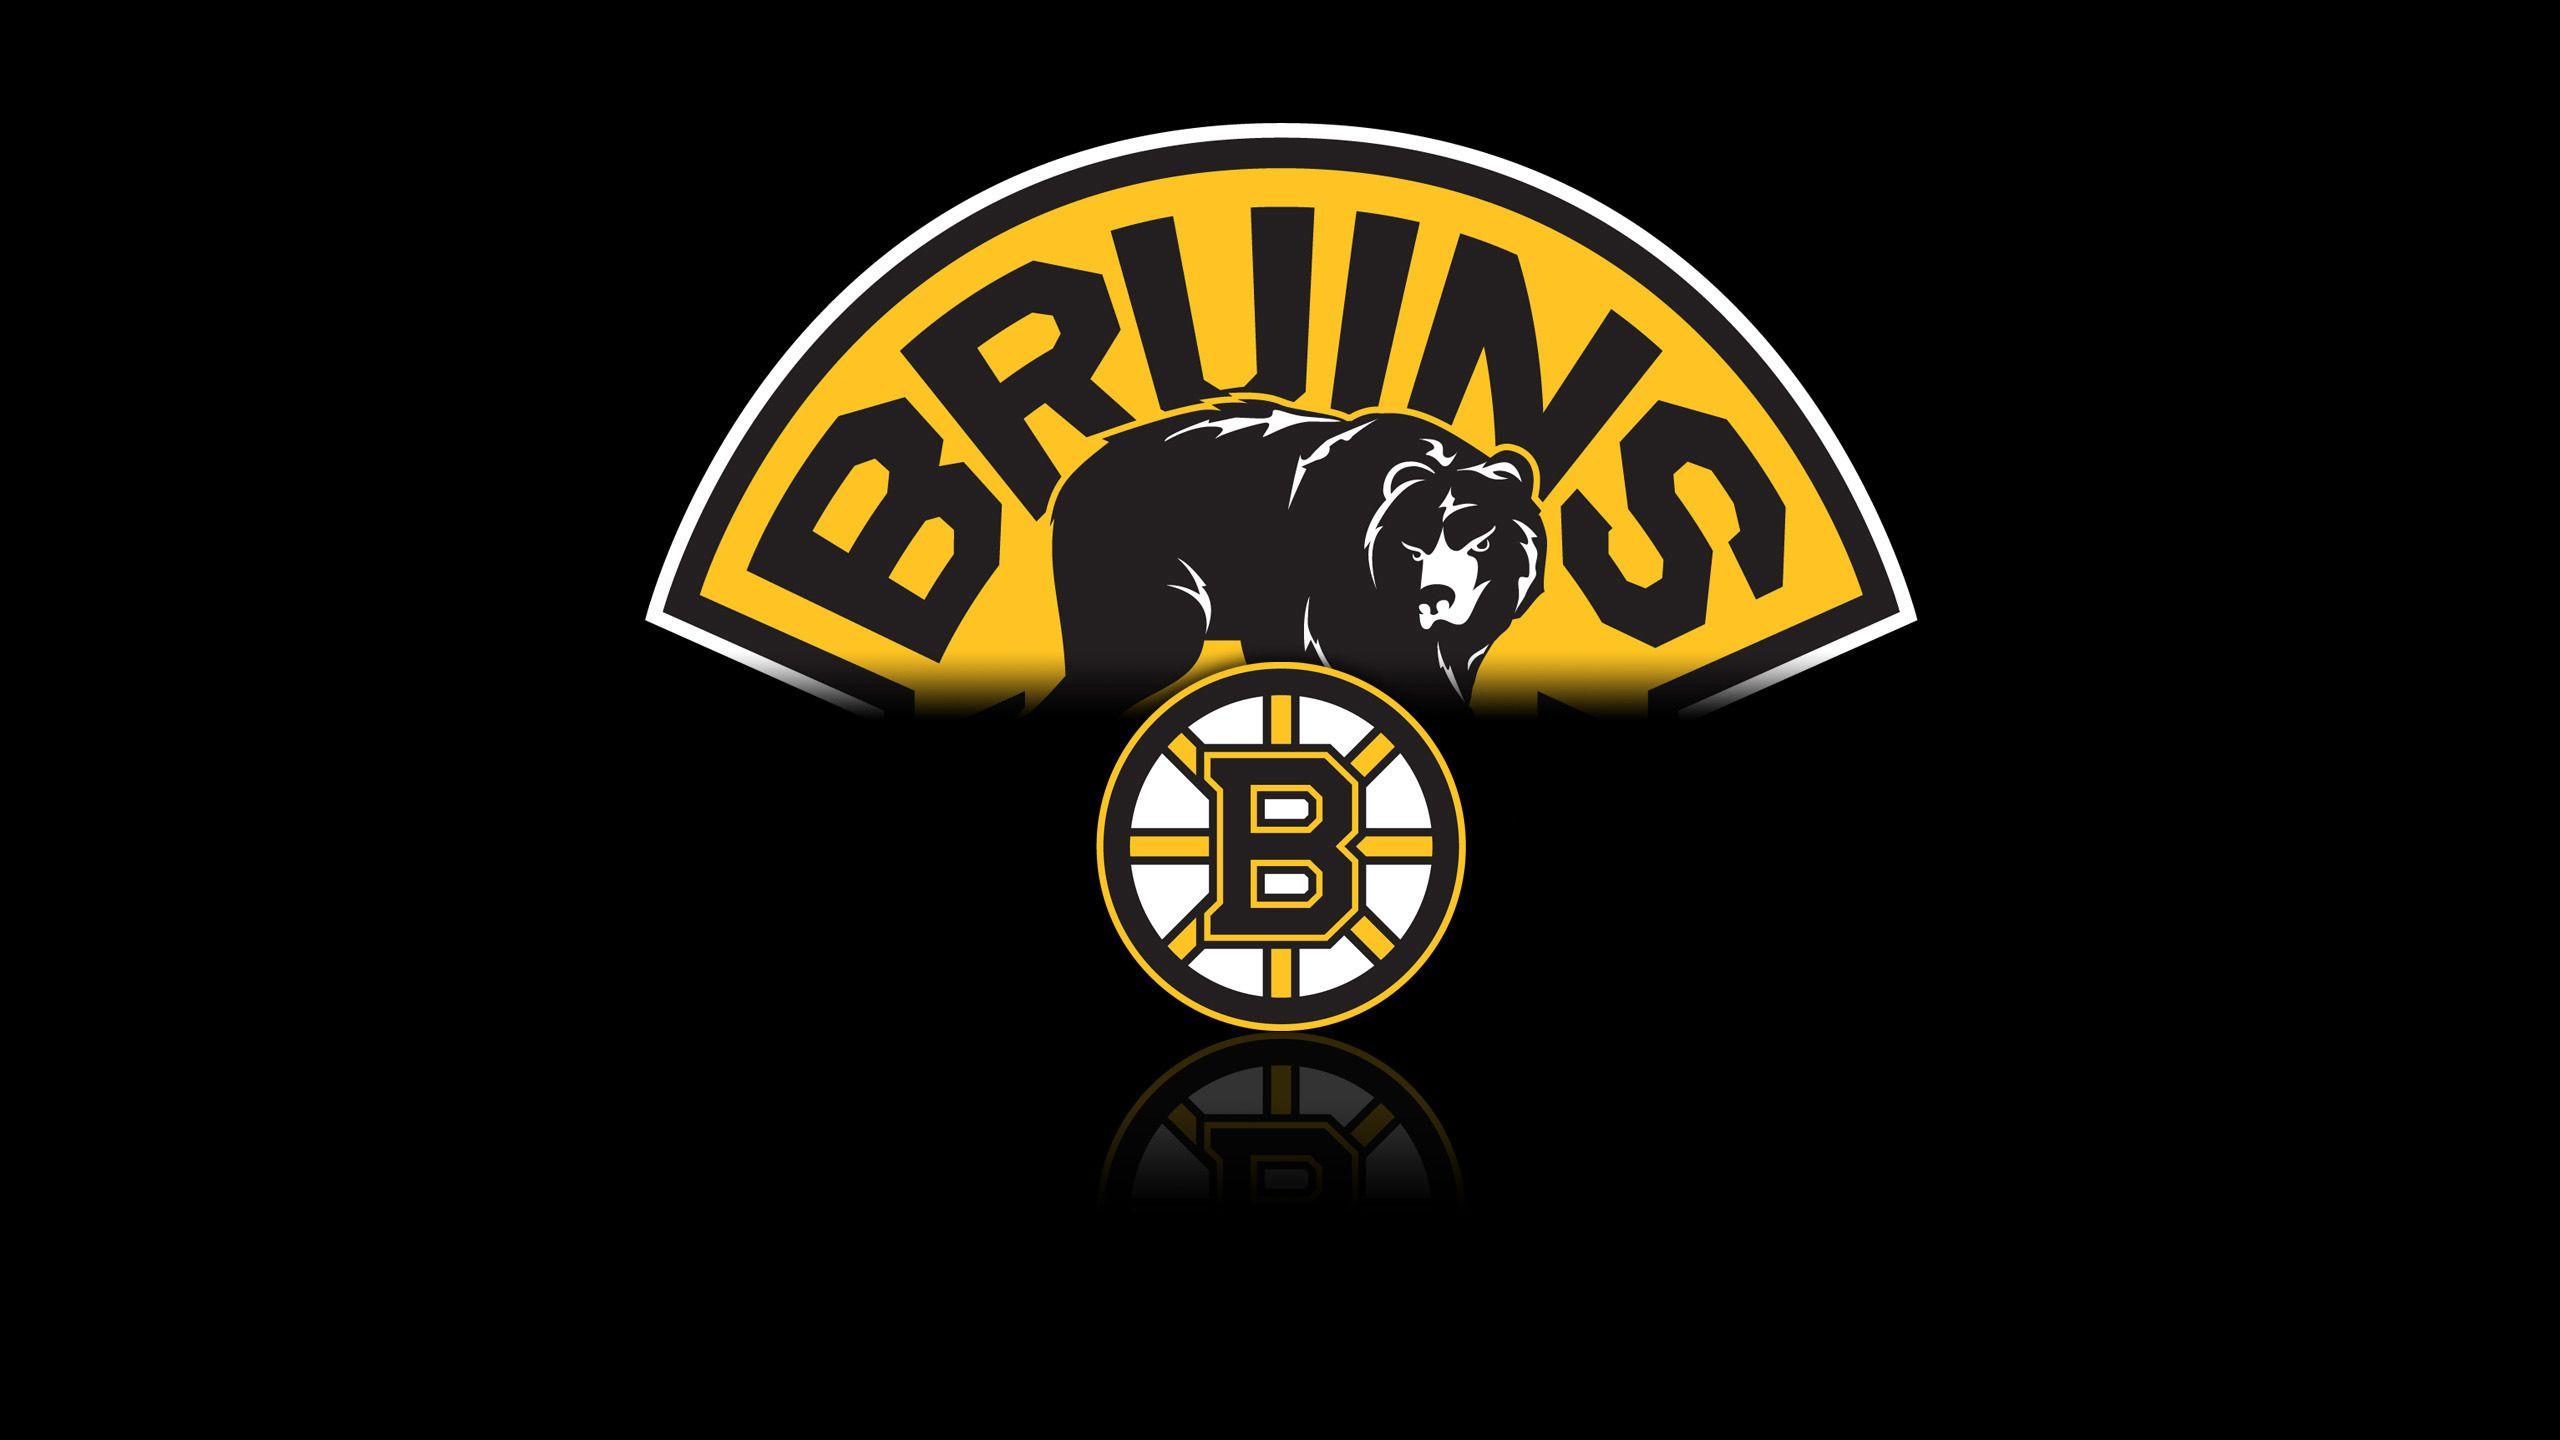 Bruins Logo - NHL Boston Bruins Logo Black wallpaper 2018 in Hockey